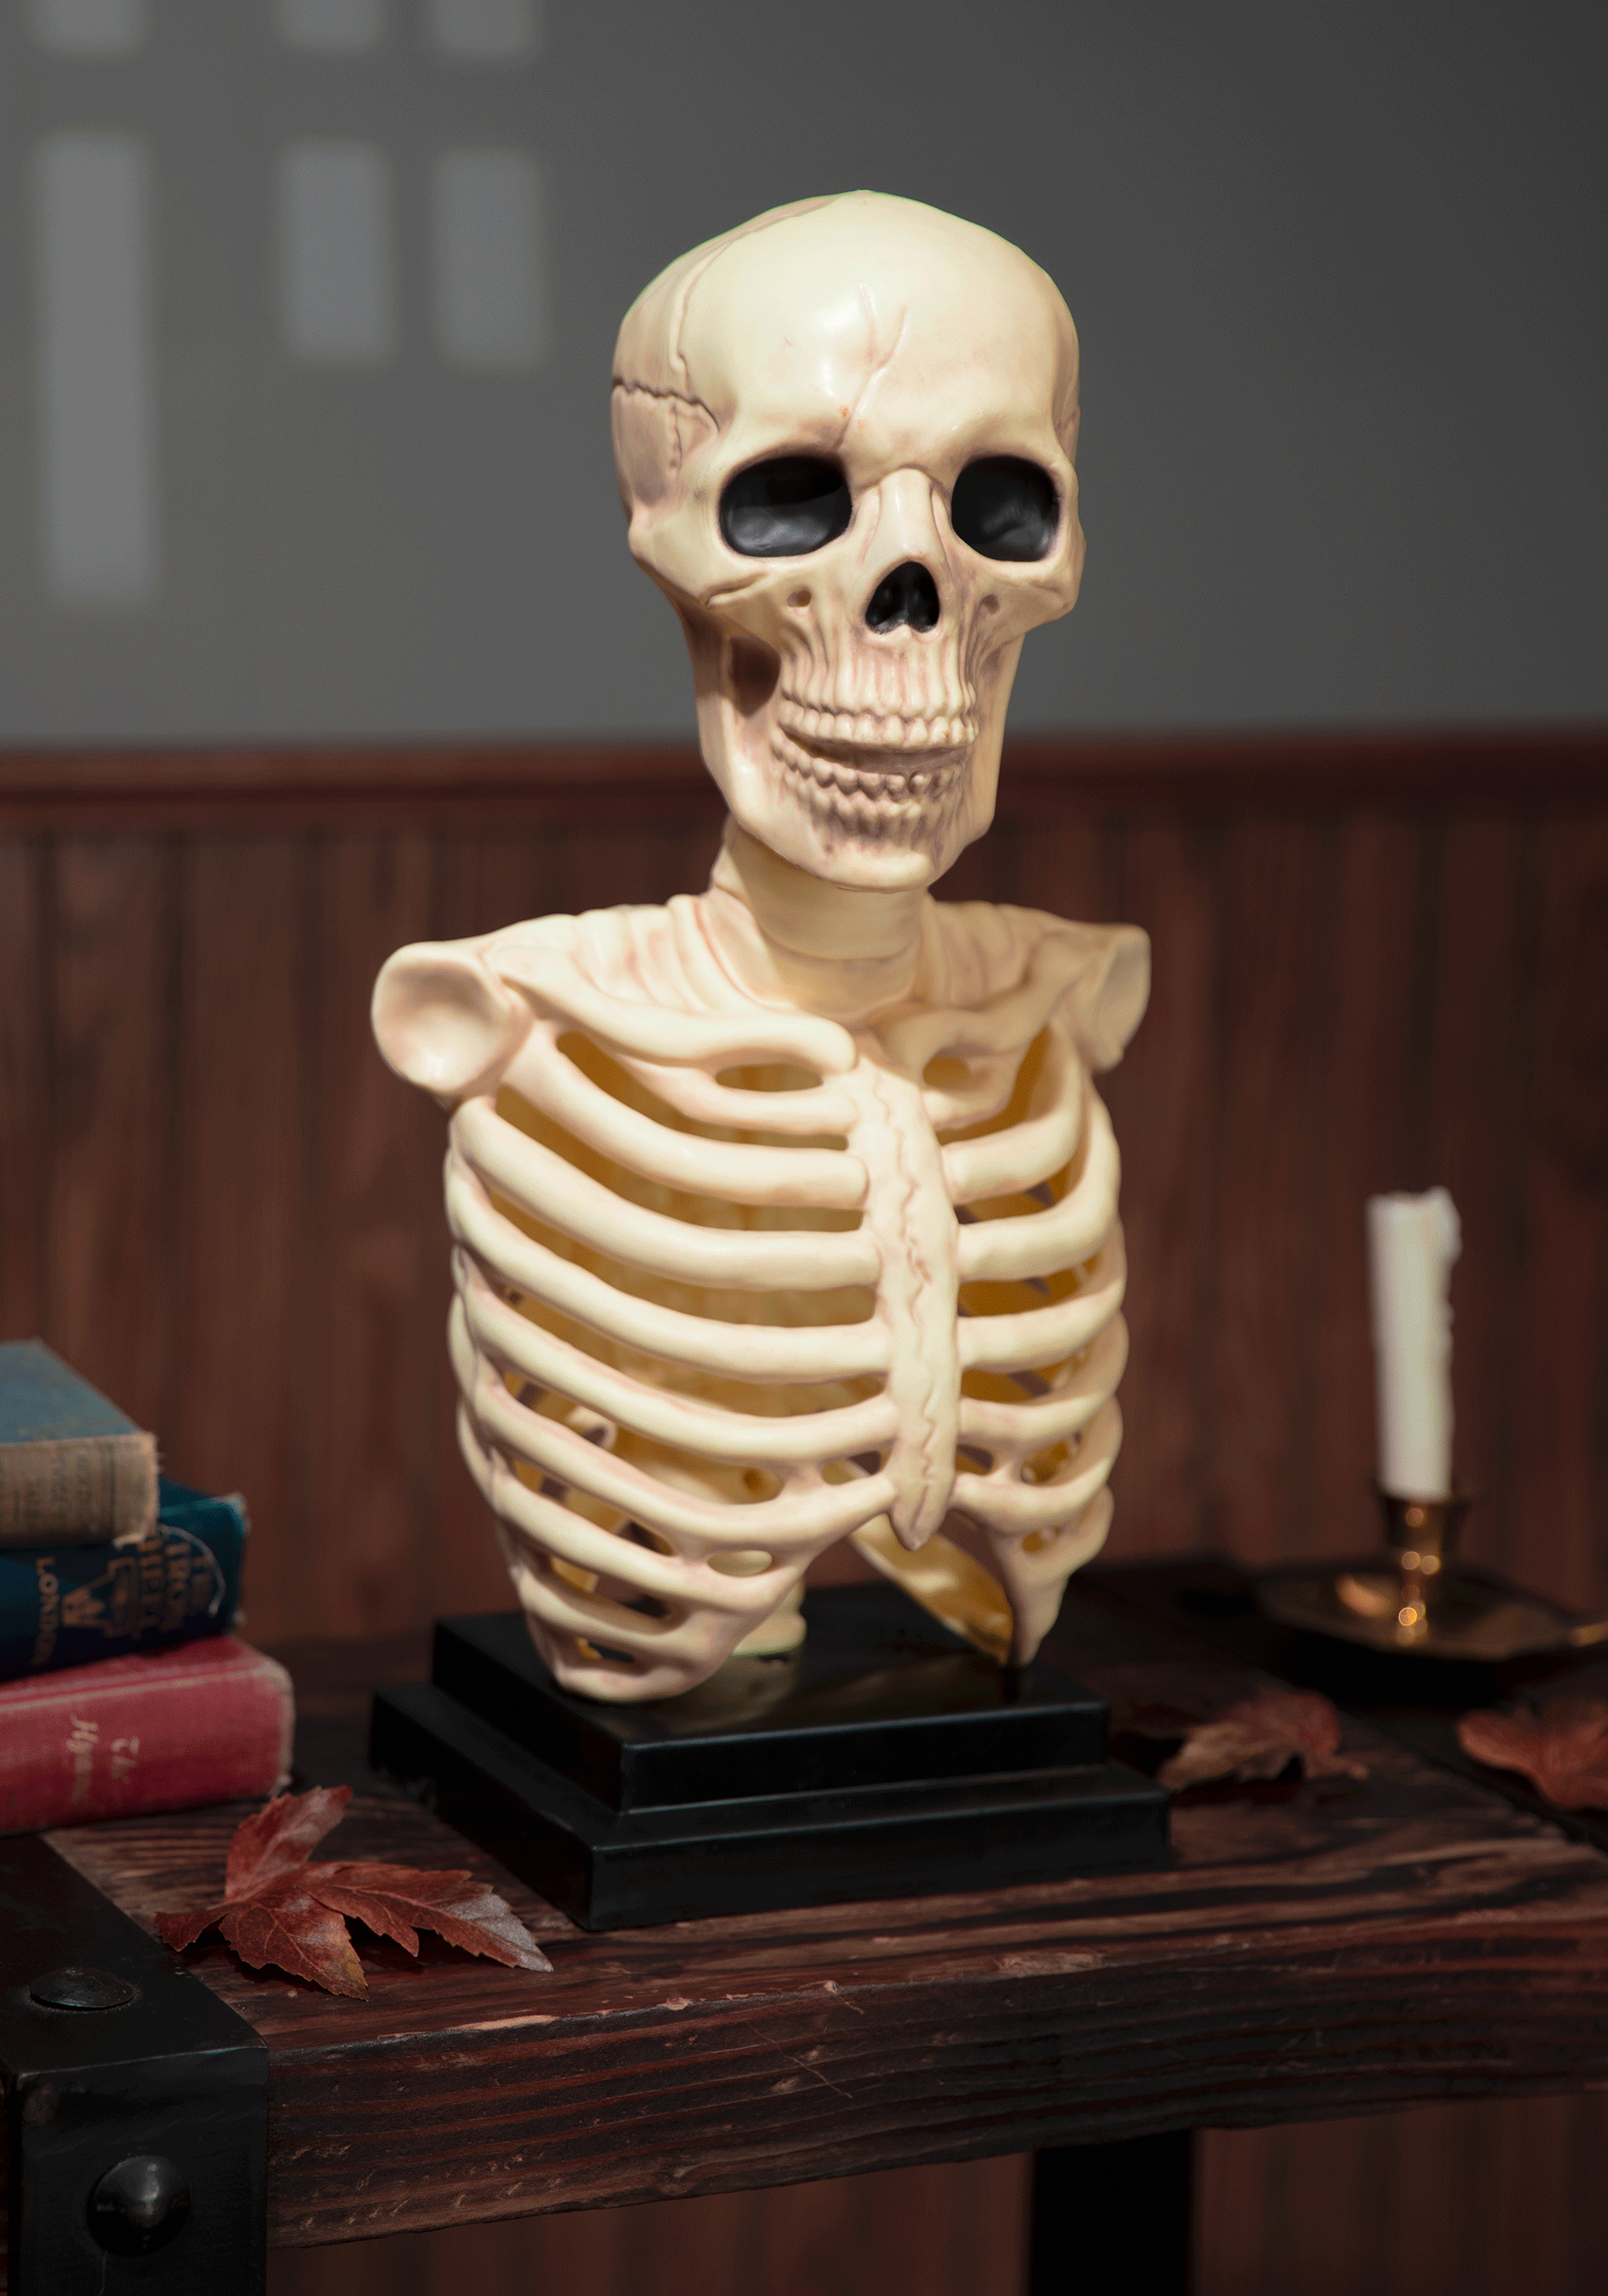 16-Inch Skeleton Bust With Light & Sound Prop , Skeleton Decorations